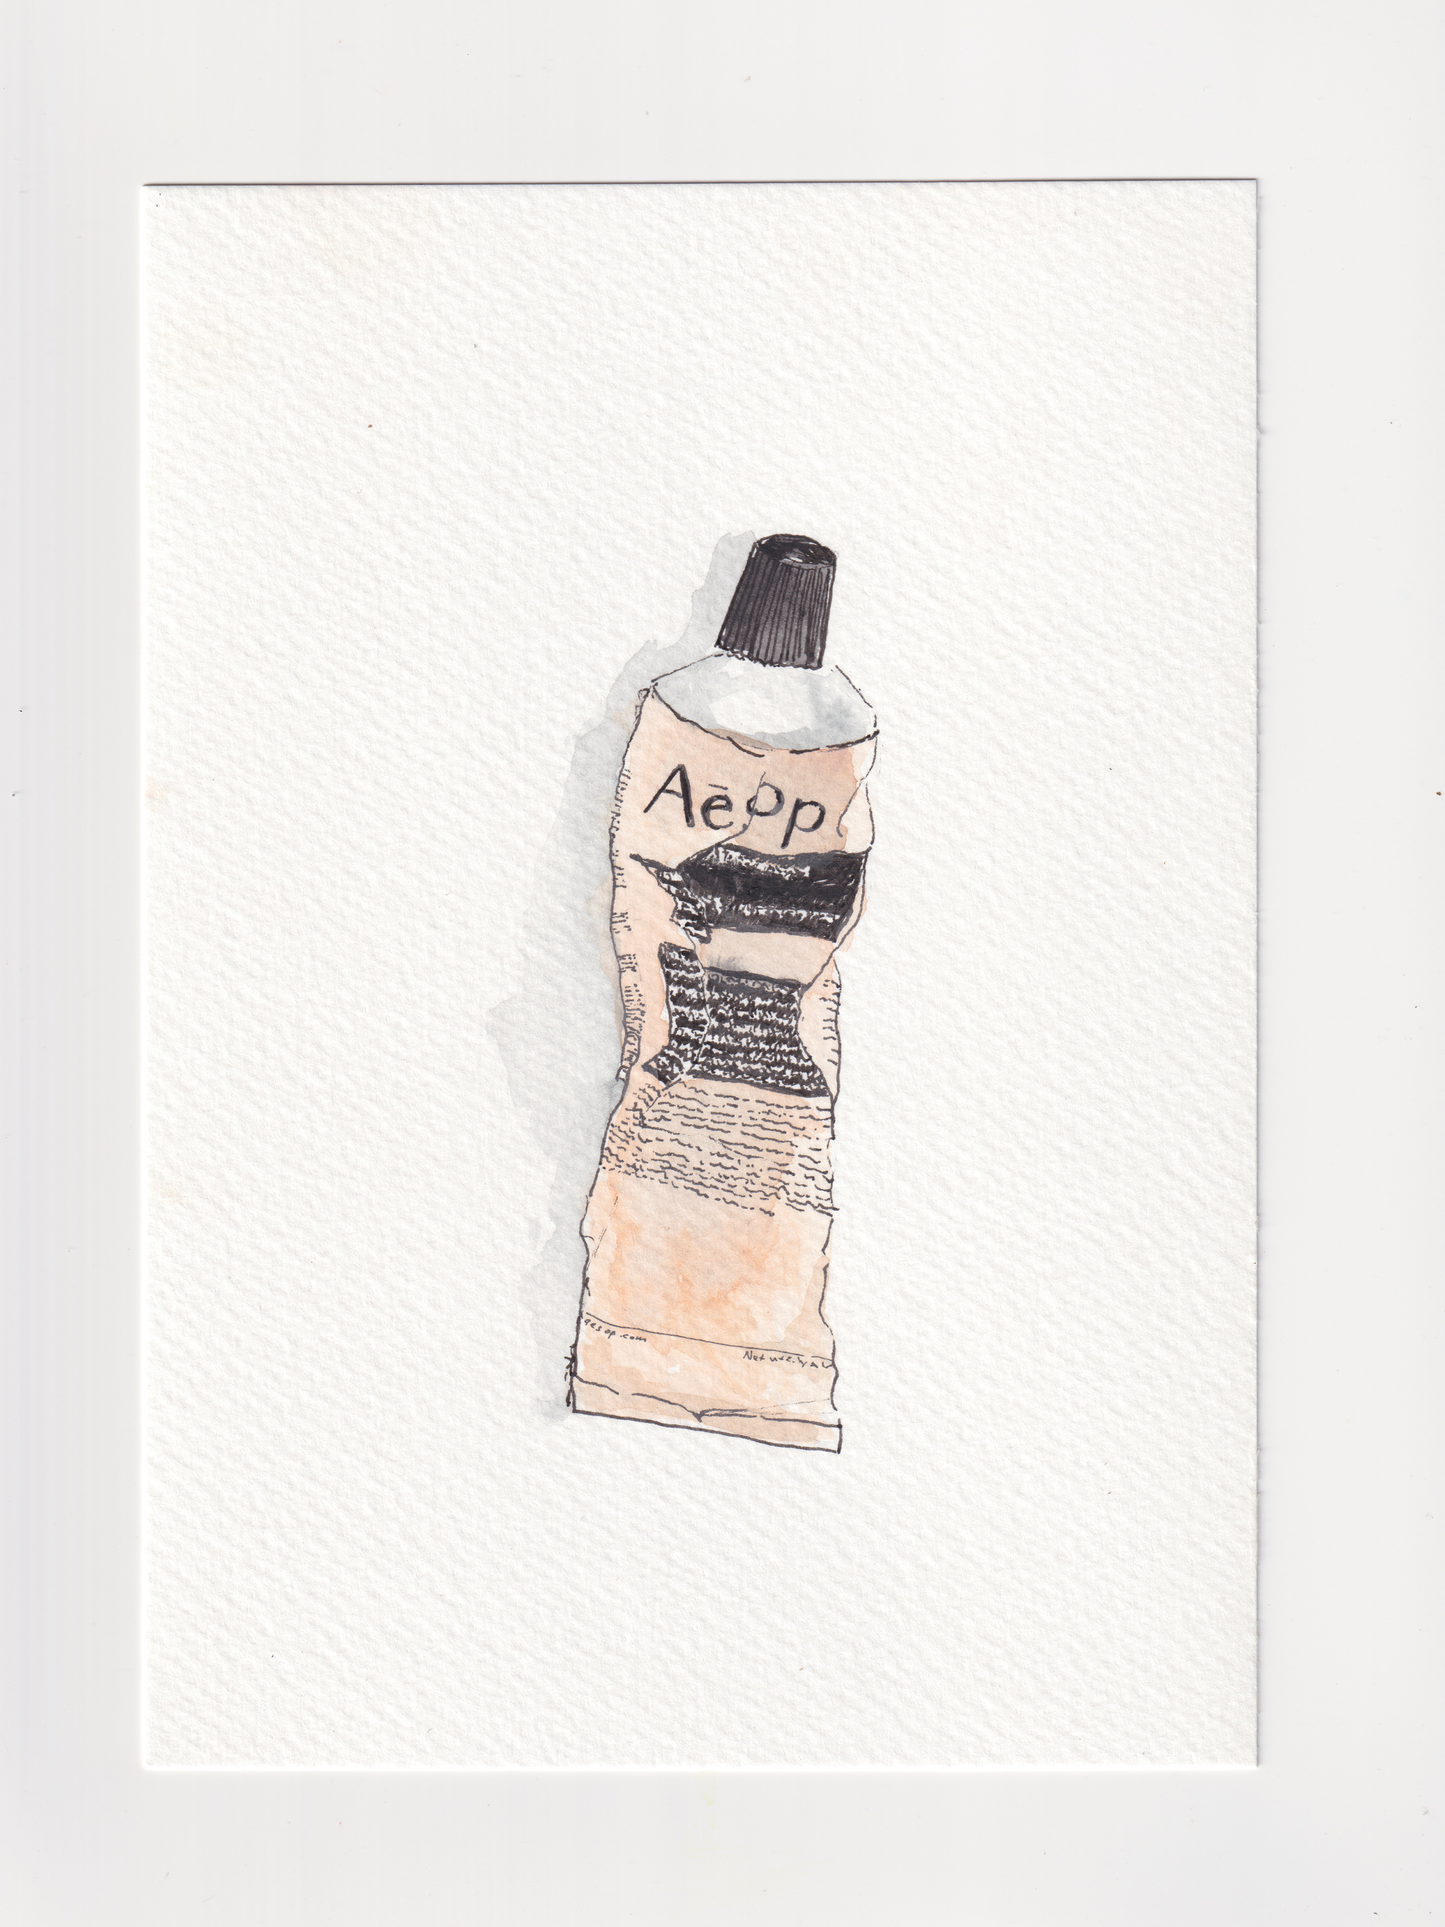 Daily Illustration - Day 6 - Aesop hand cream